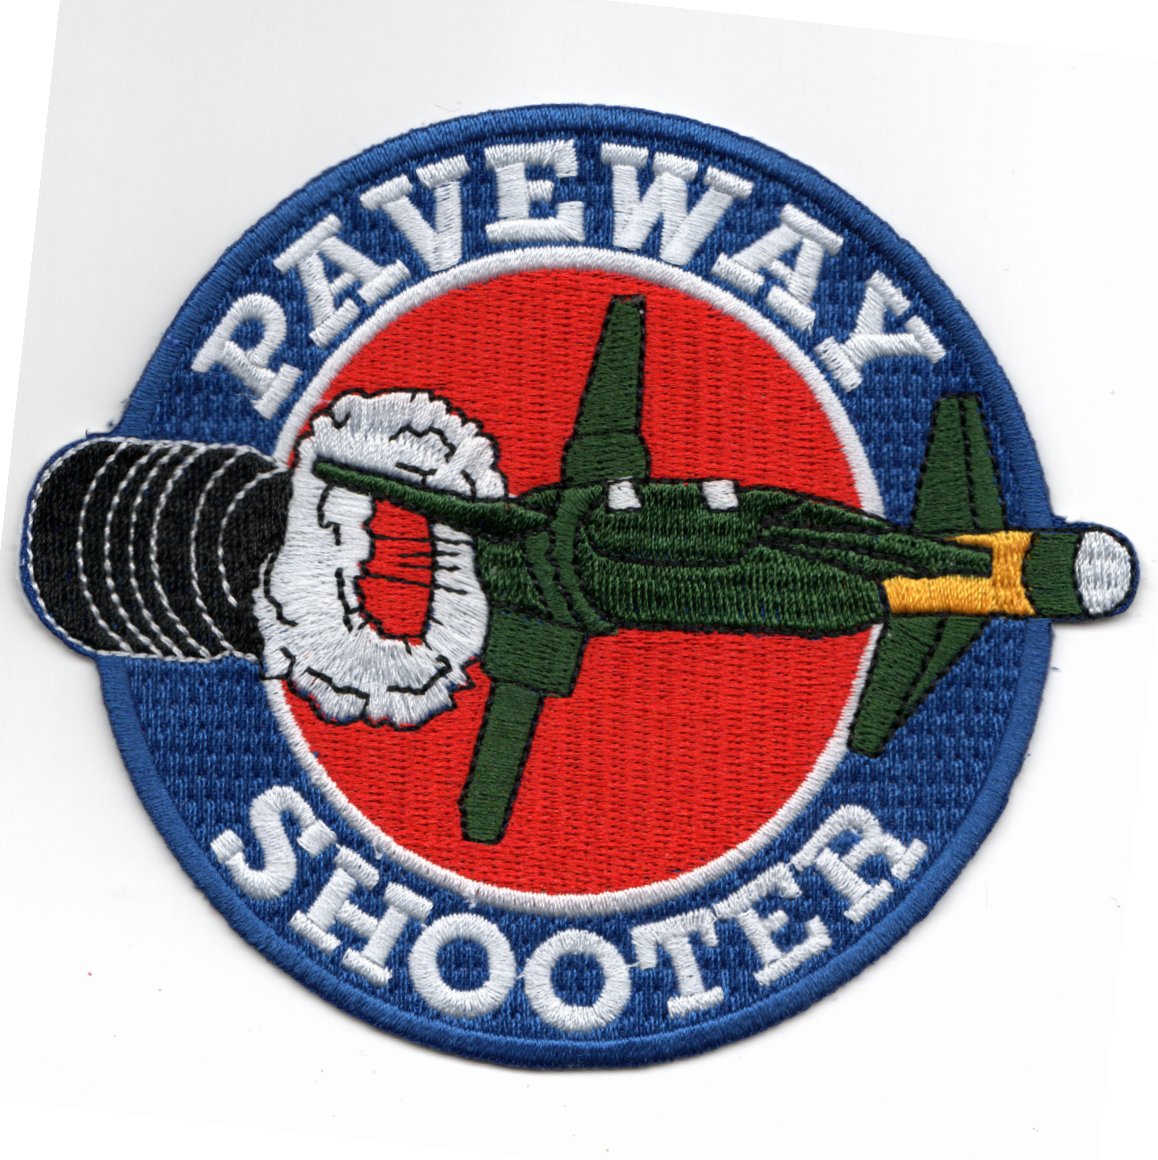  PAVEWAY SHOOTER Patch